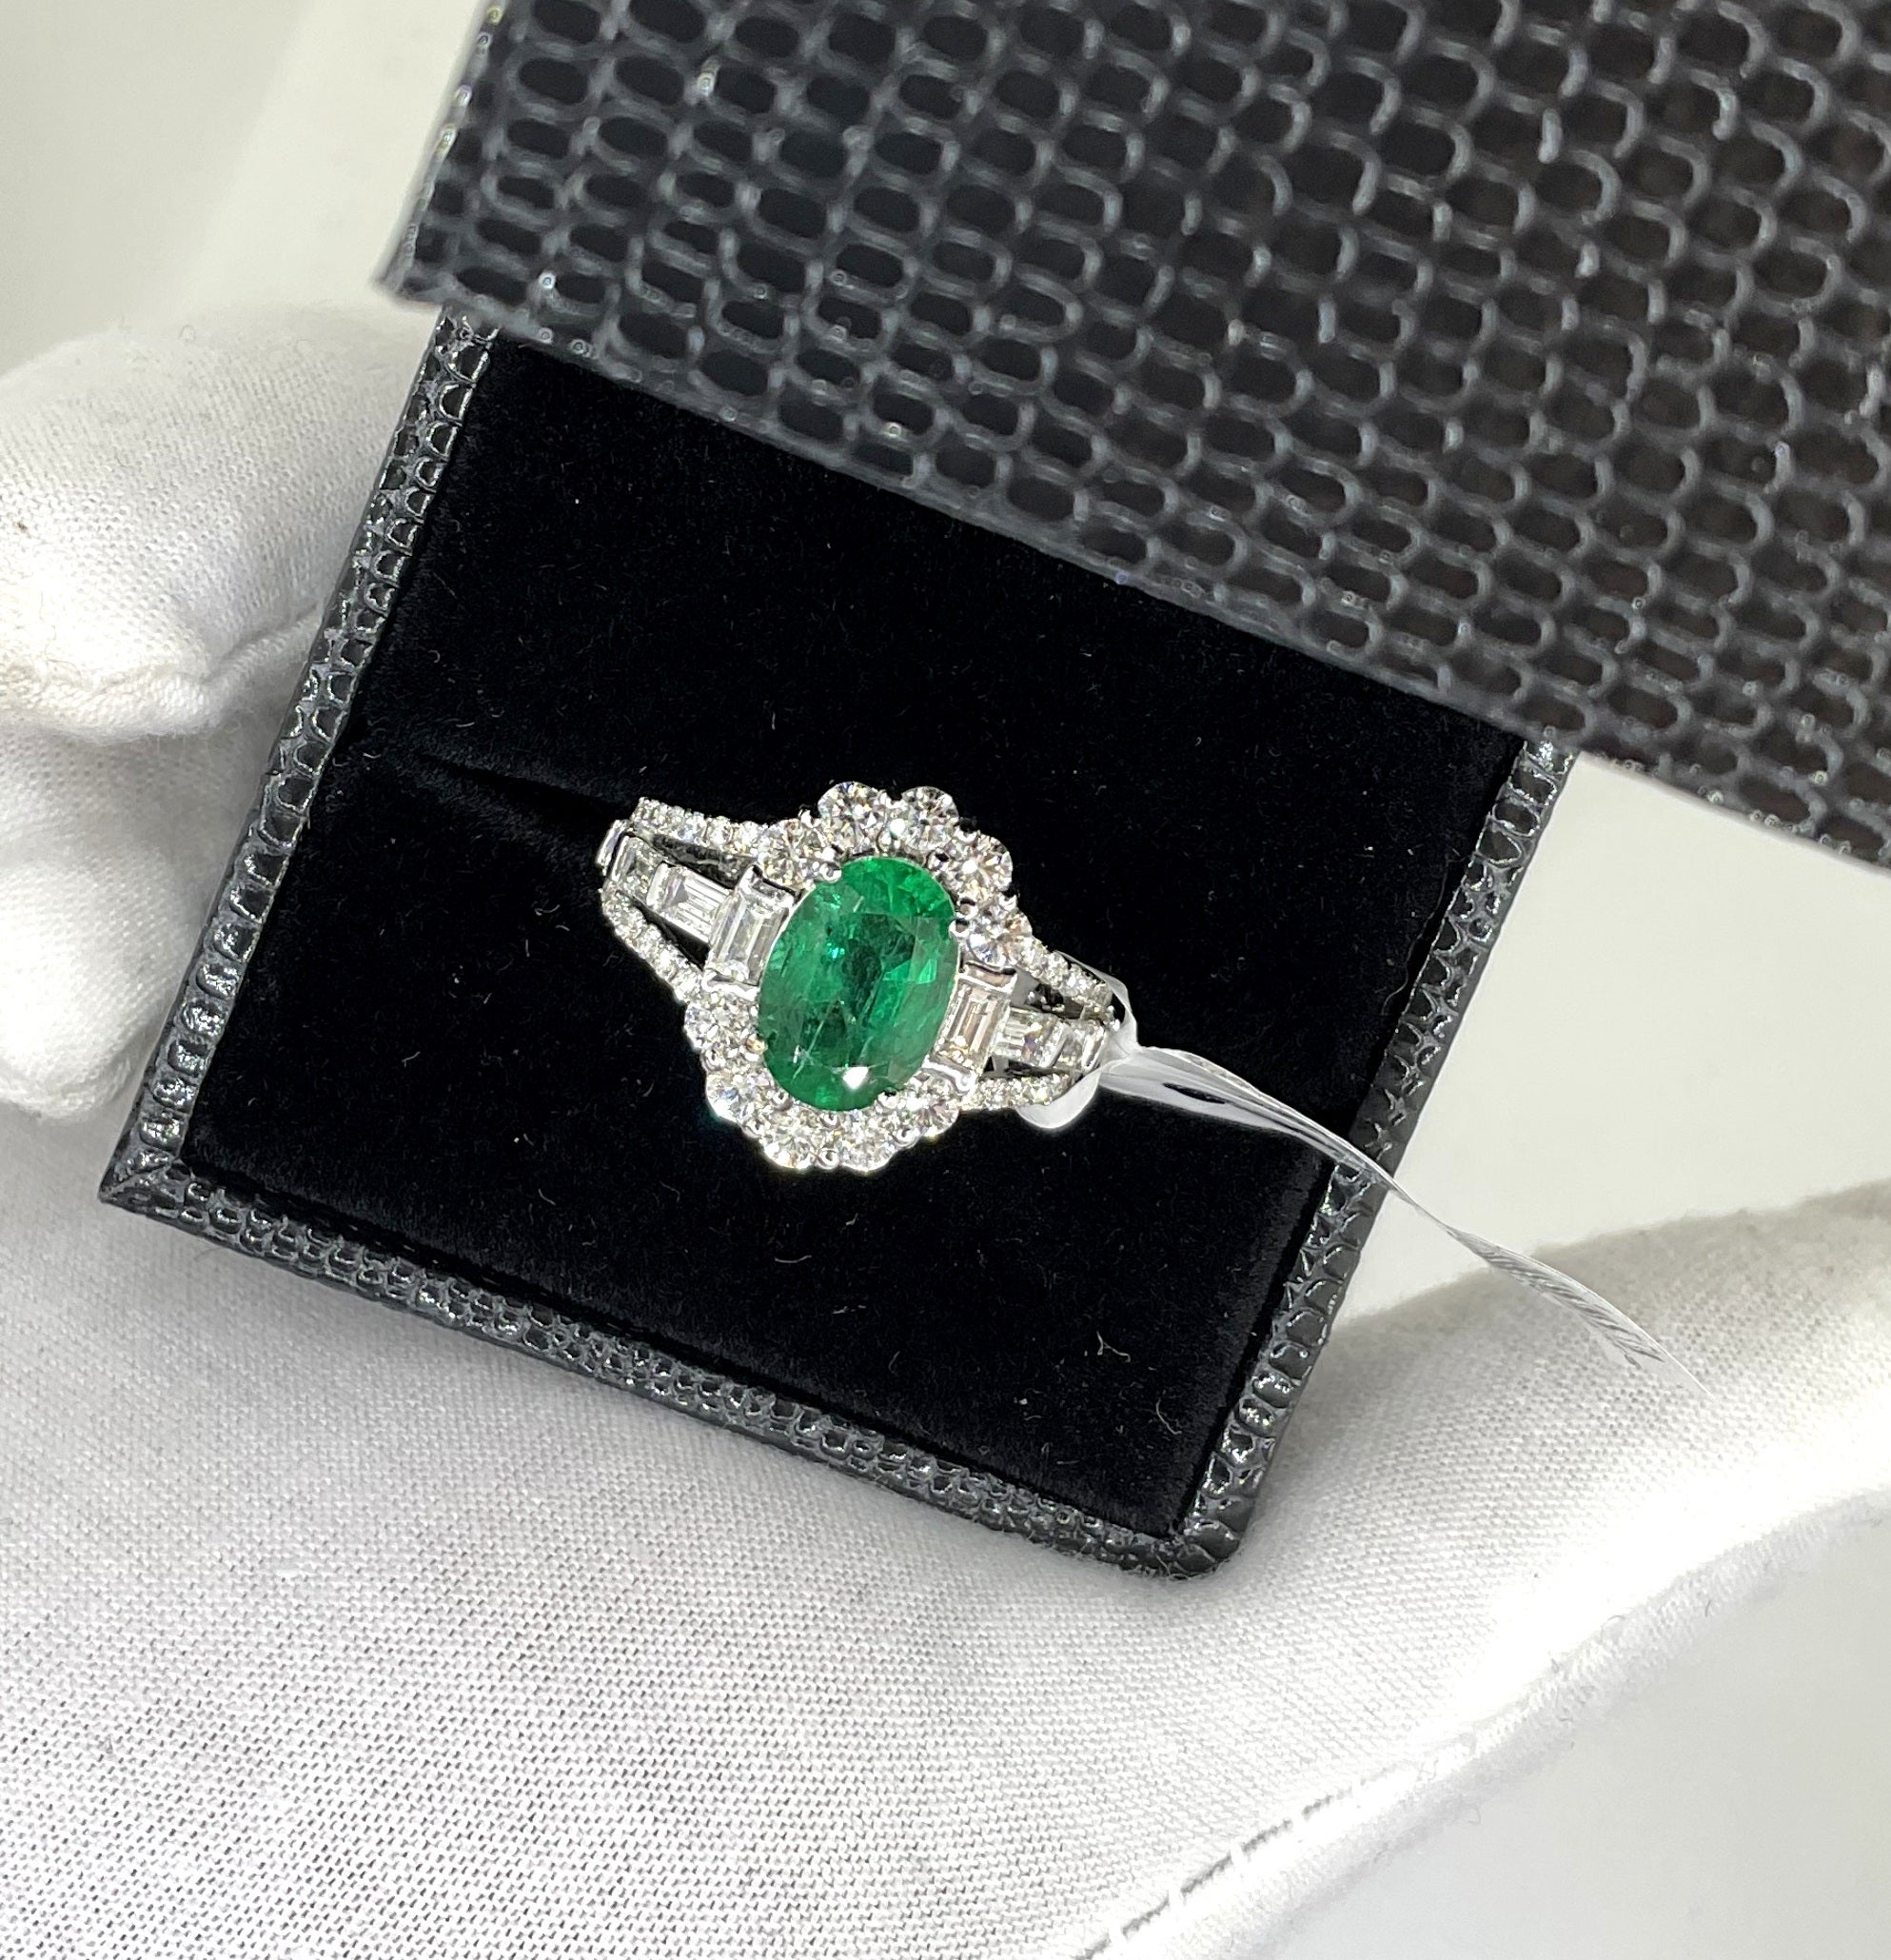 Gemstone - Emerald
Ring size US 7
Emerald weight - 2.05 carats
Natural Diamond Weight: 1.49 carats total
Net 18K Gold Weight - 5.712 Grams
Total Gross Ring Weight - 6.420 grams
